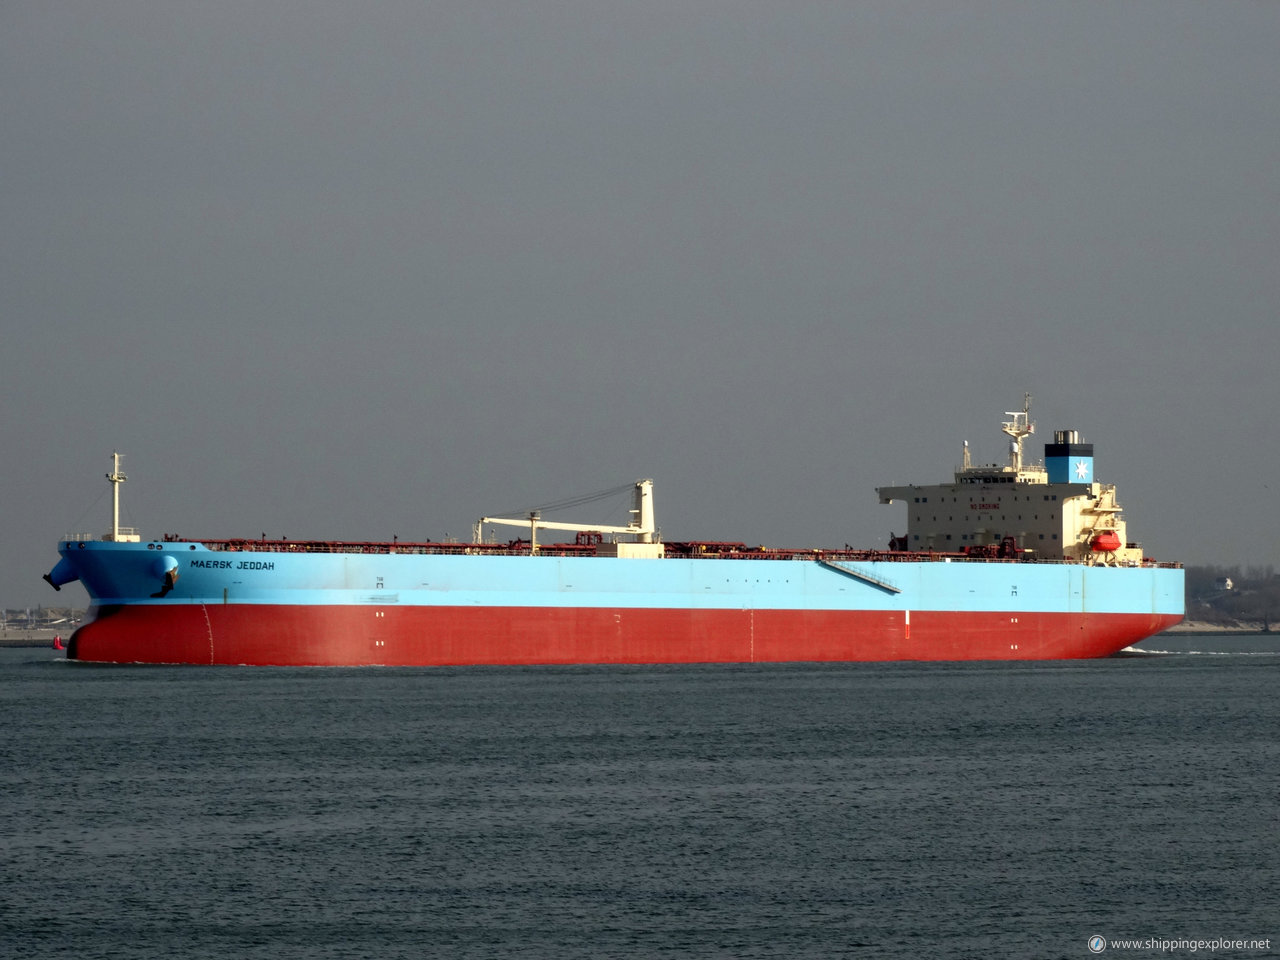 Maersk Jeddah